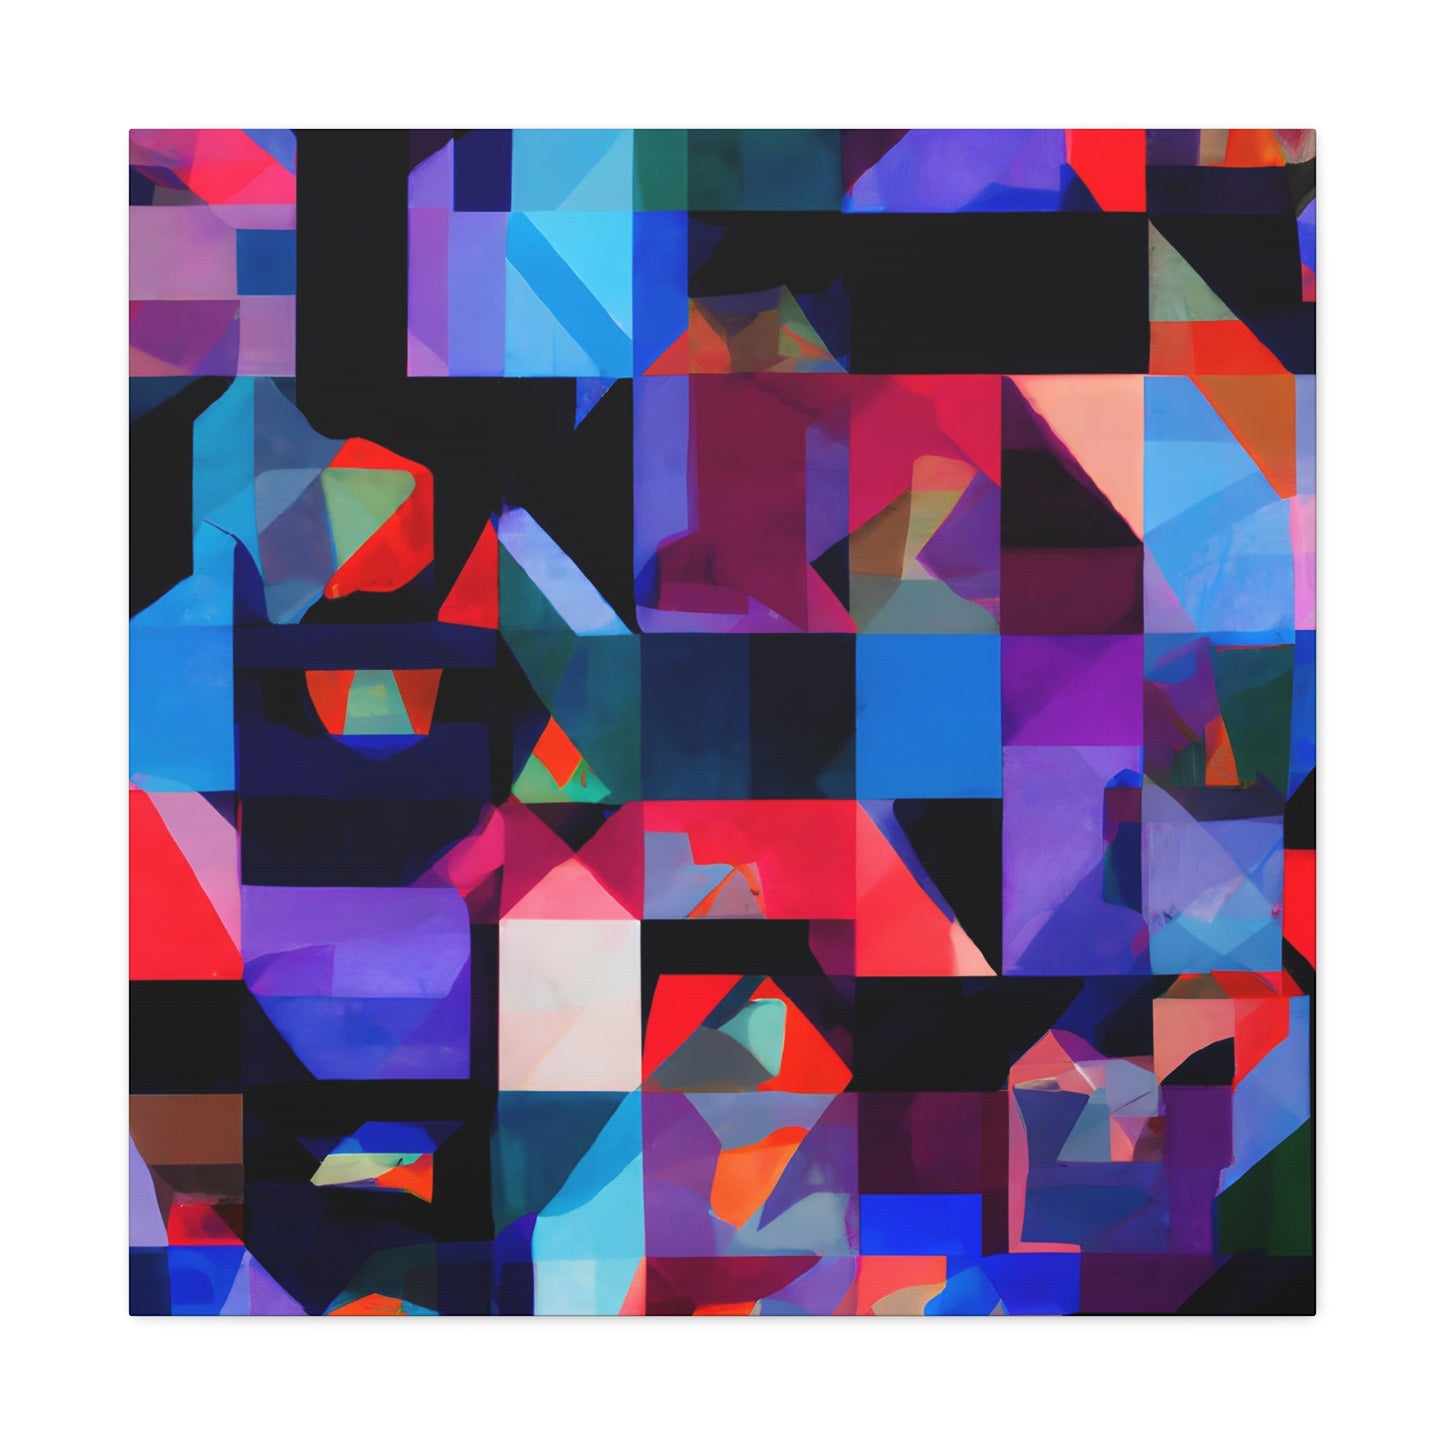 Enchilada Star Cluster - Digital Art Canvas